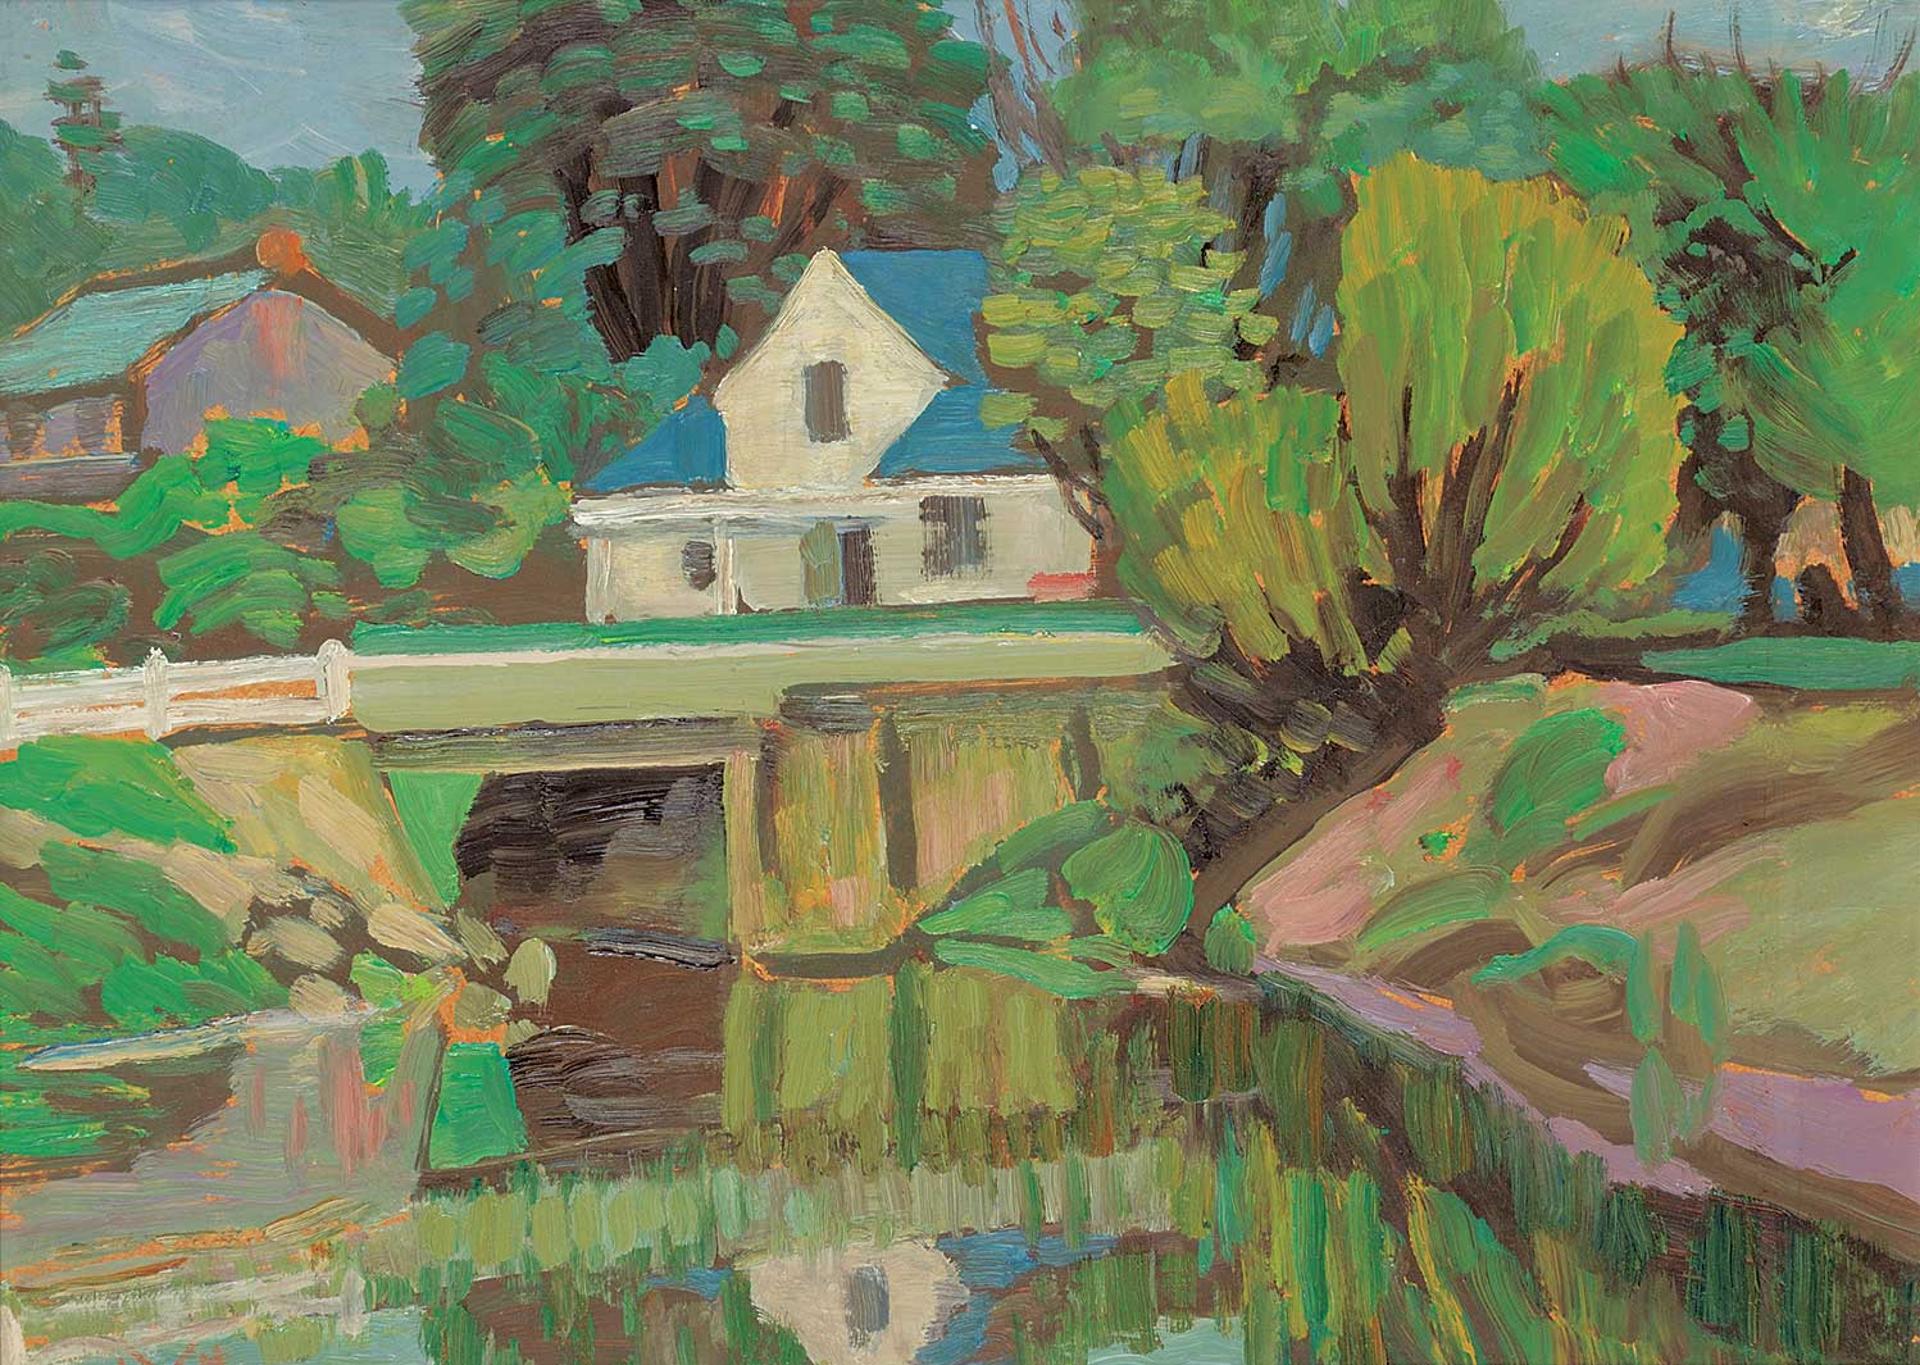 Illingworth Holey (Buck) Kerr (1905-1989) - House at a Bridge, Chilliwack